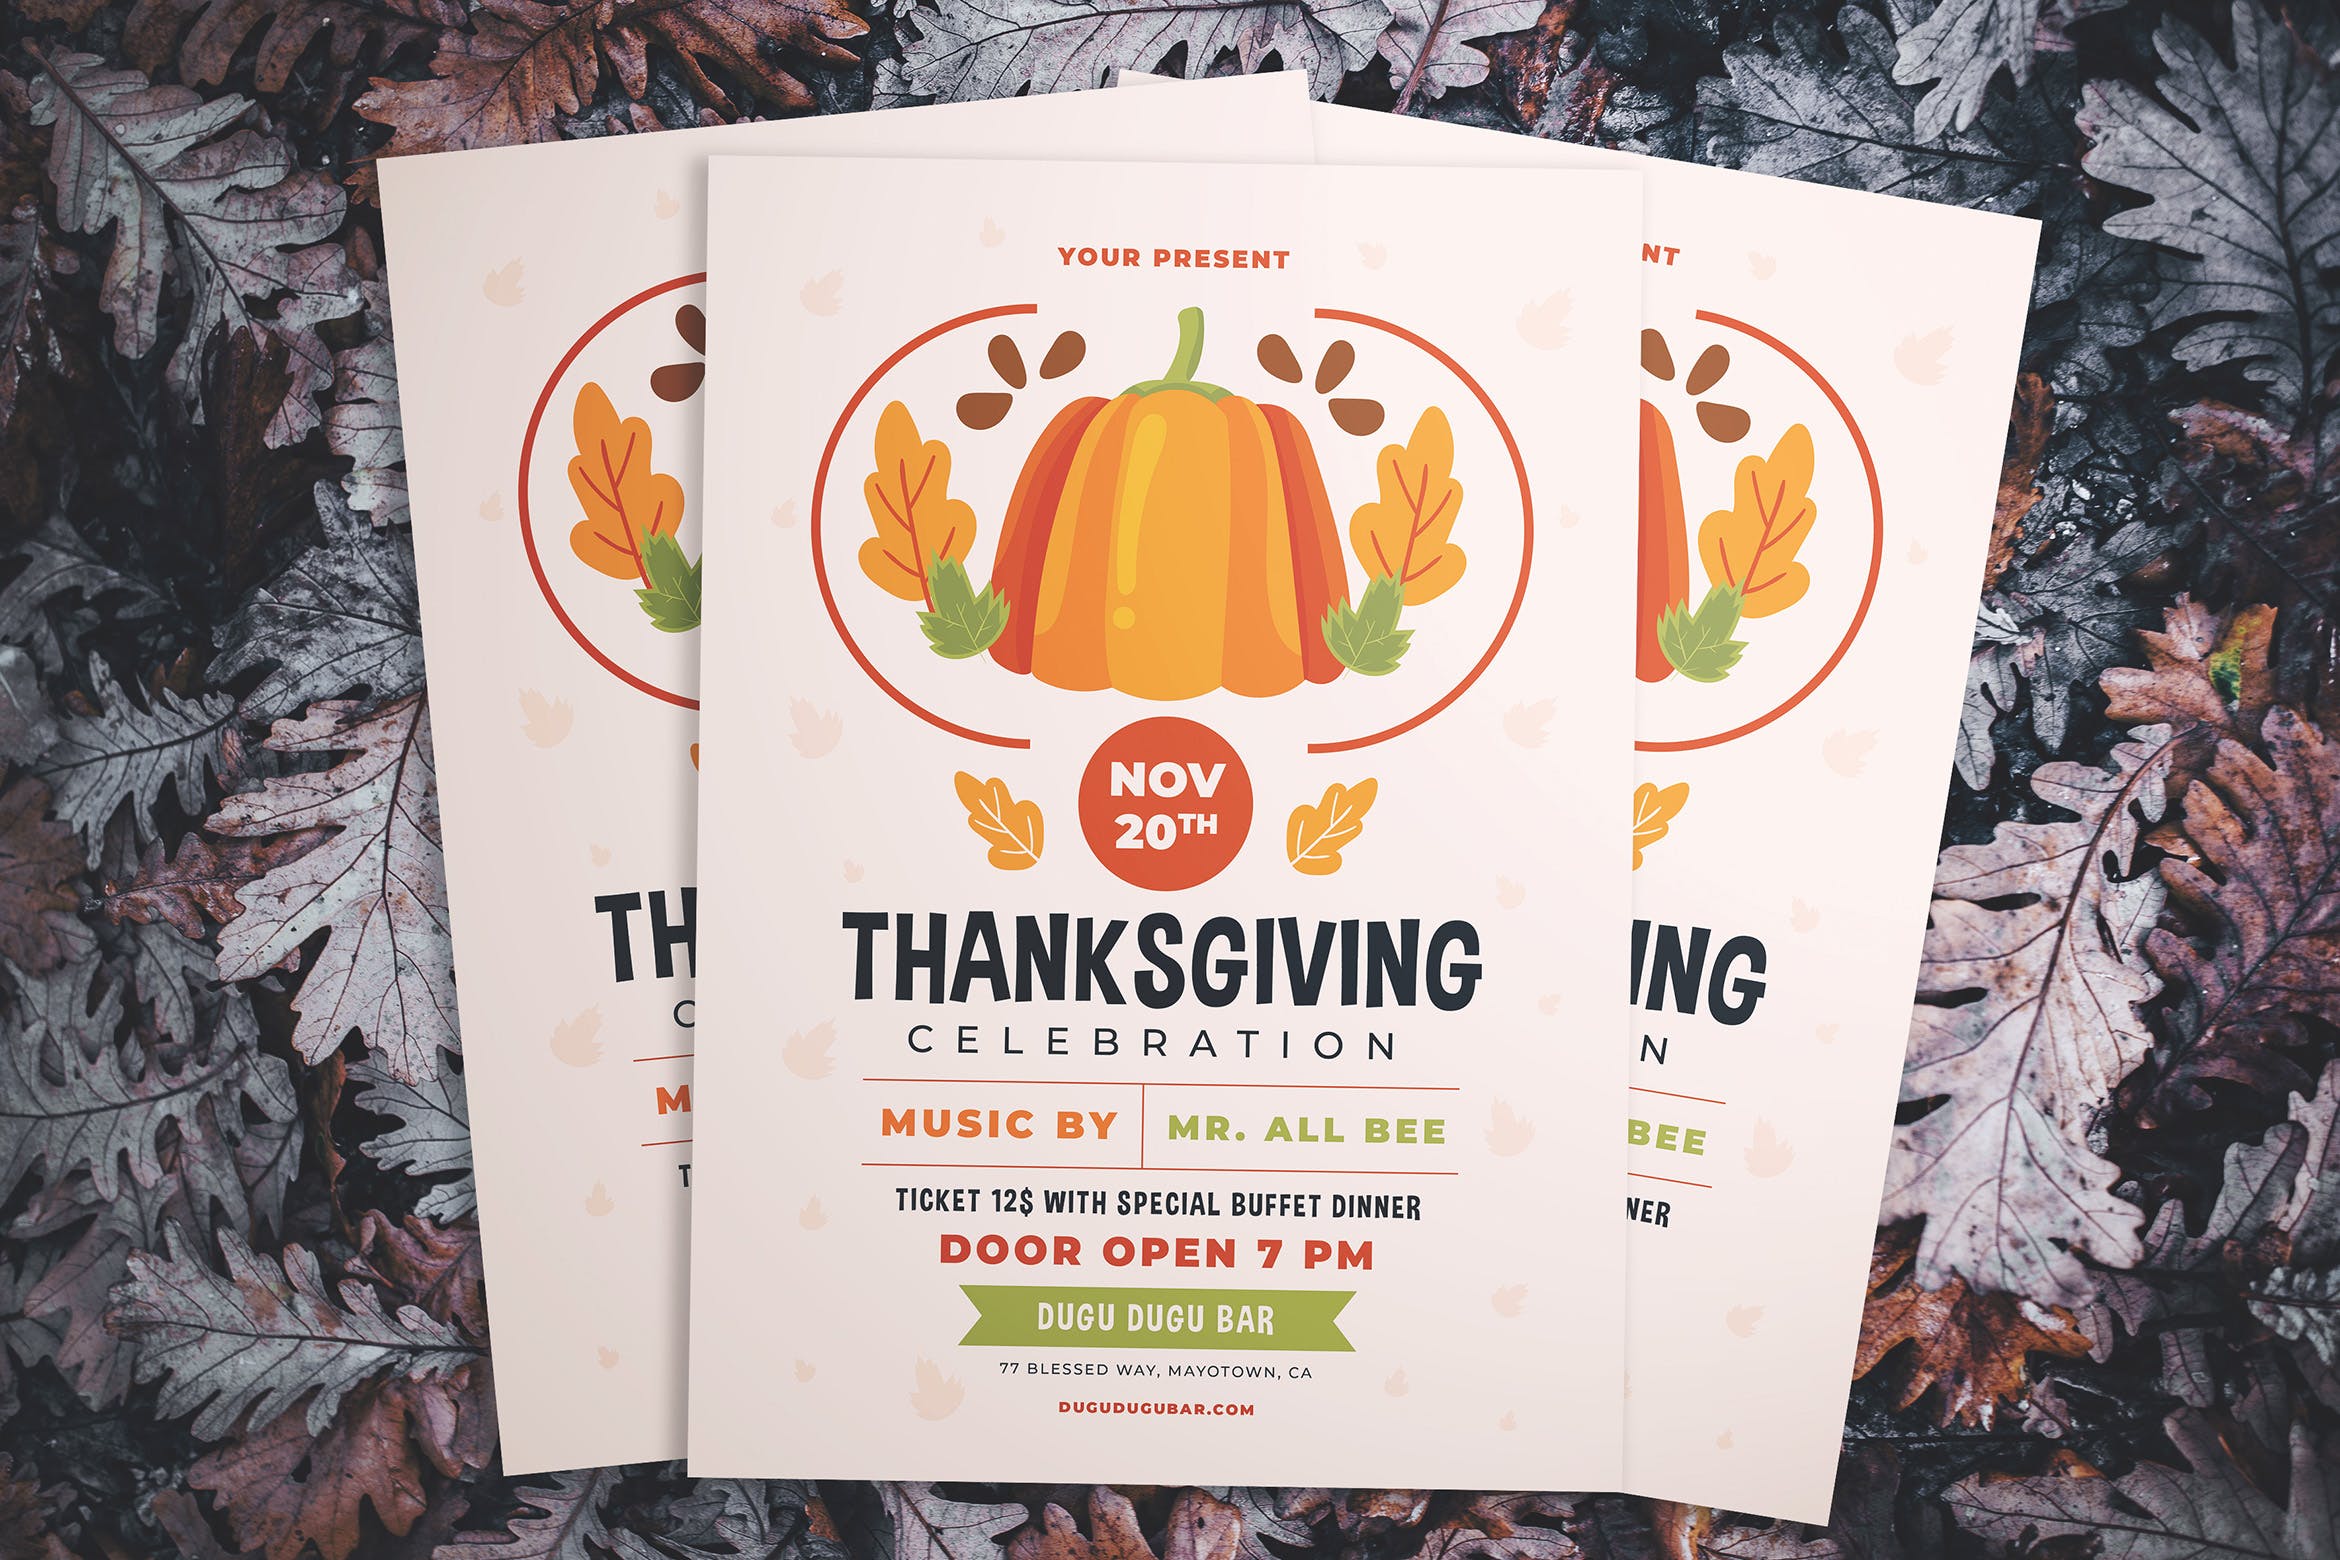 感恩节庆祝活动海报模板素材 Thanksgiving Celebration Flyer插图